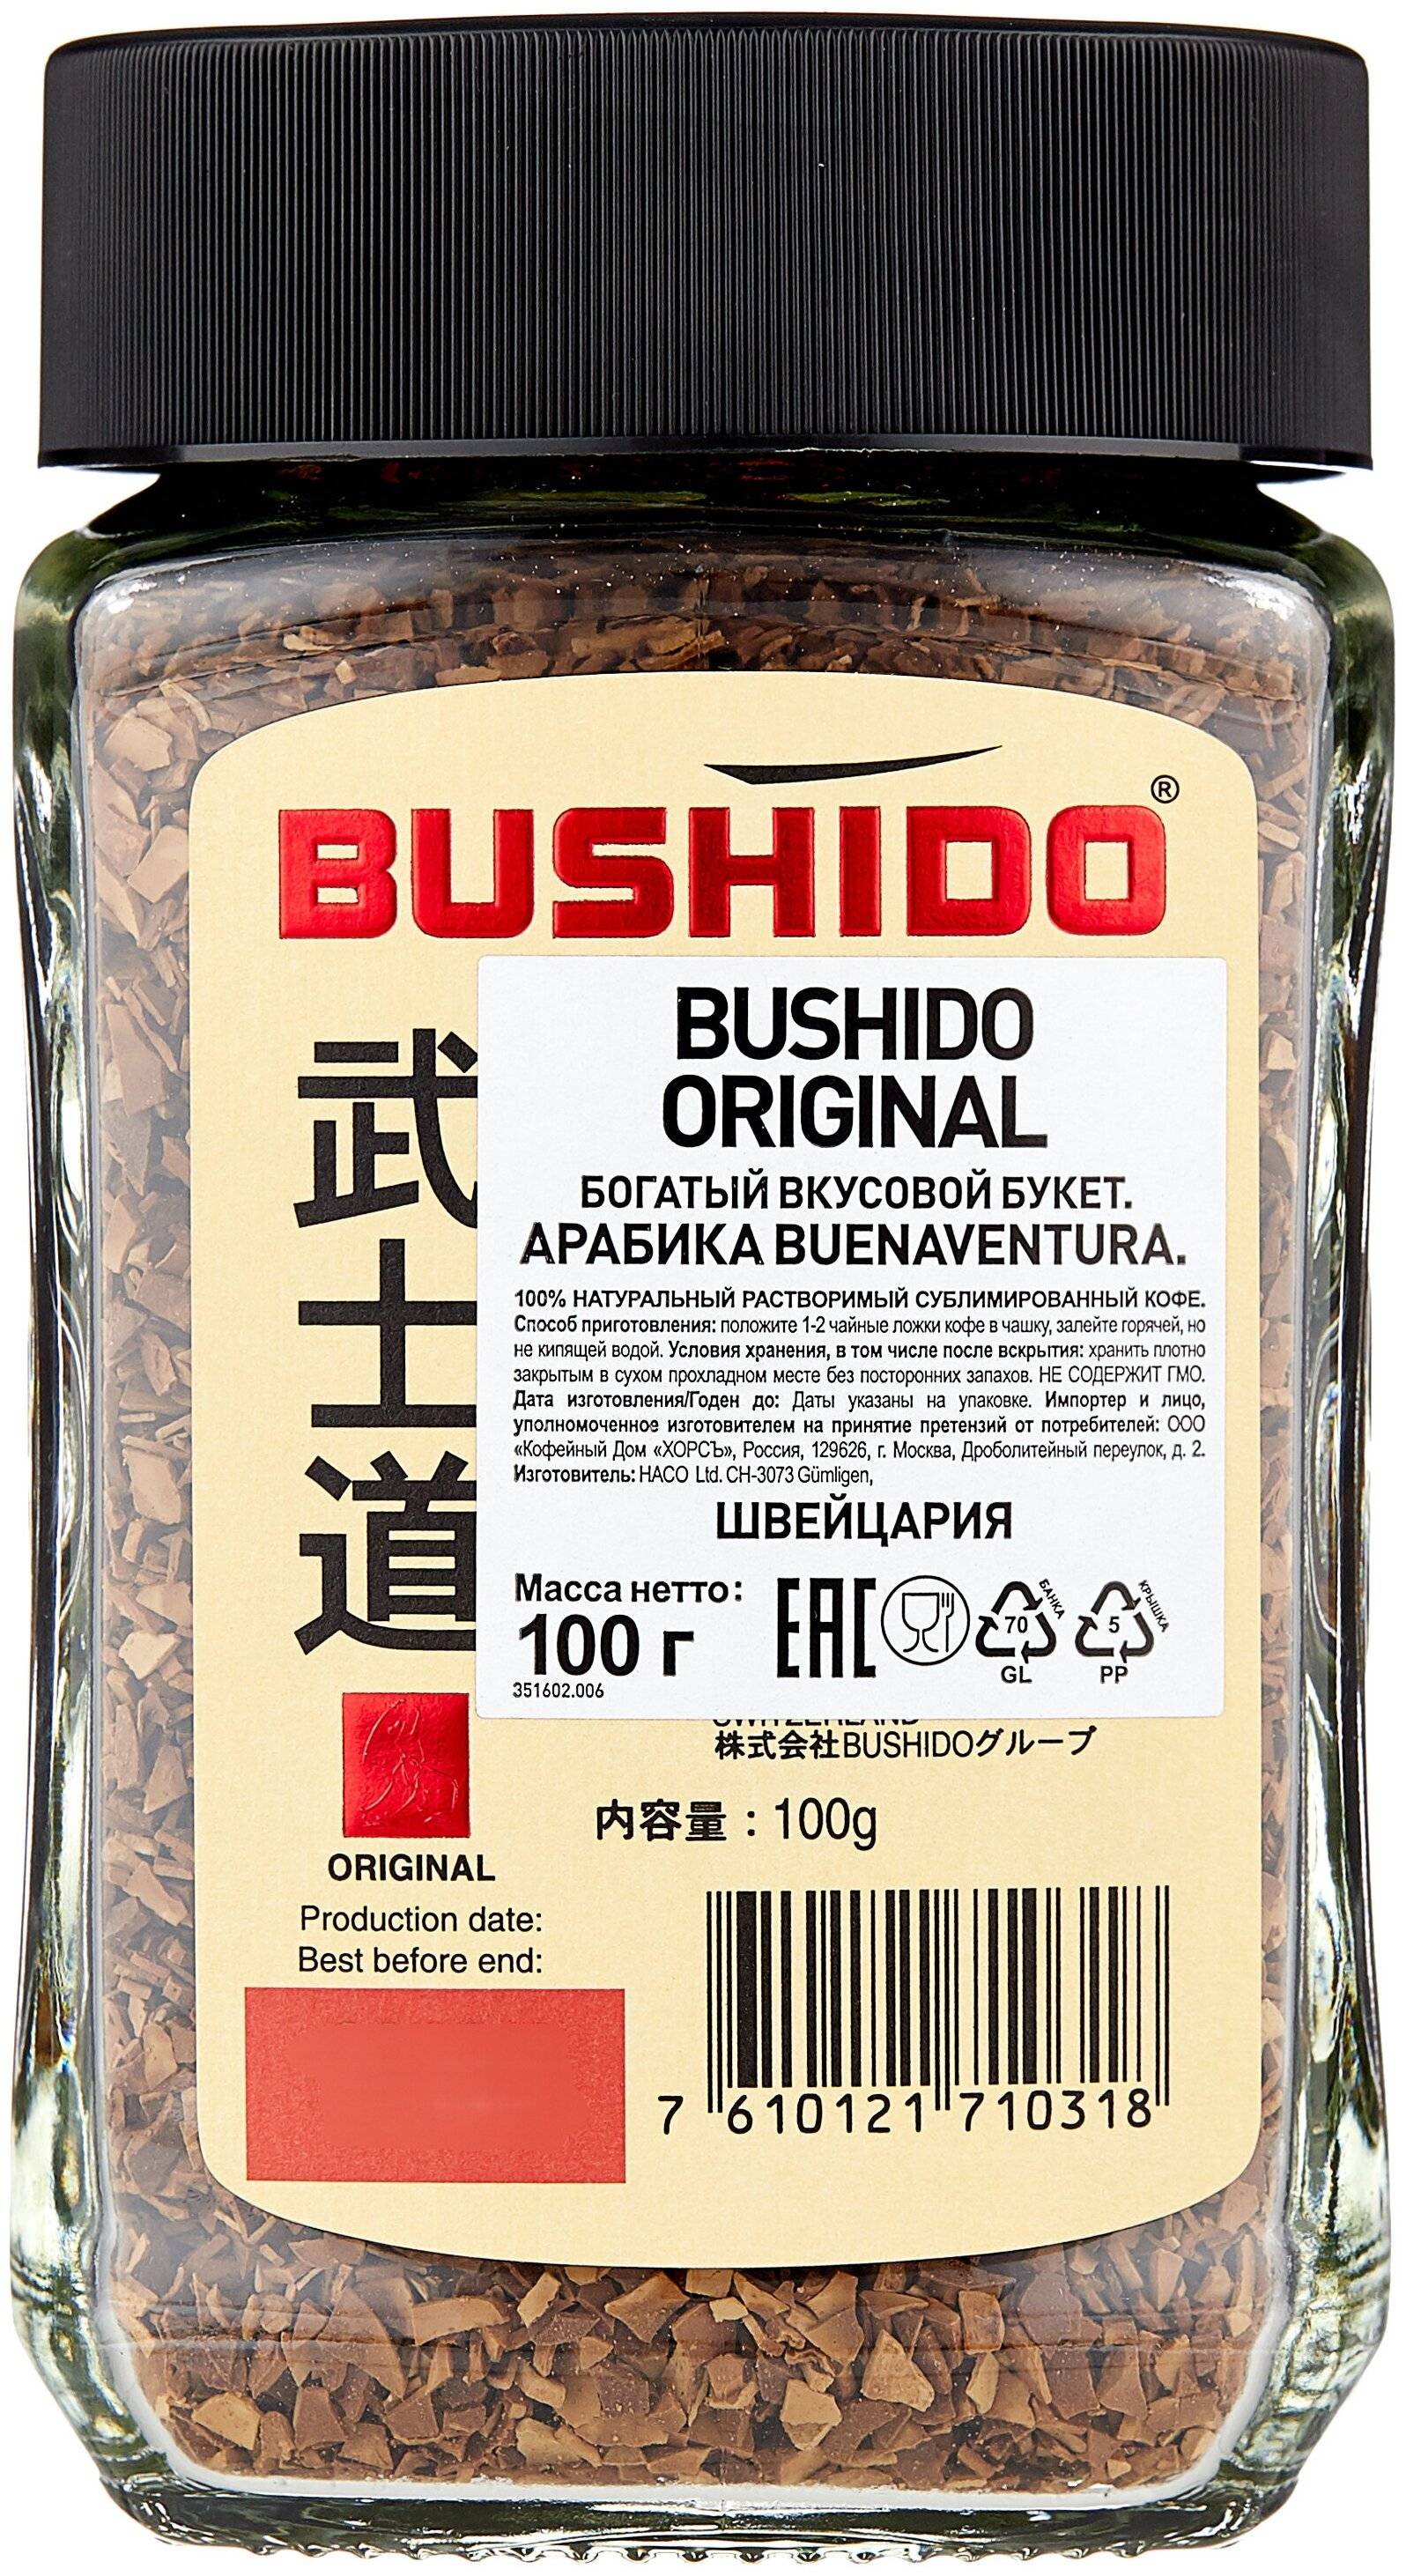 Бушидо: швейцарский кофе с японскими мотивами